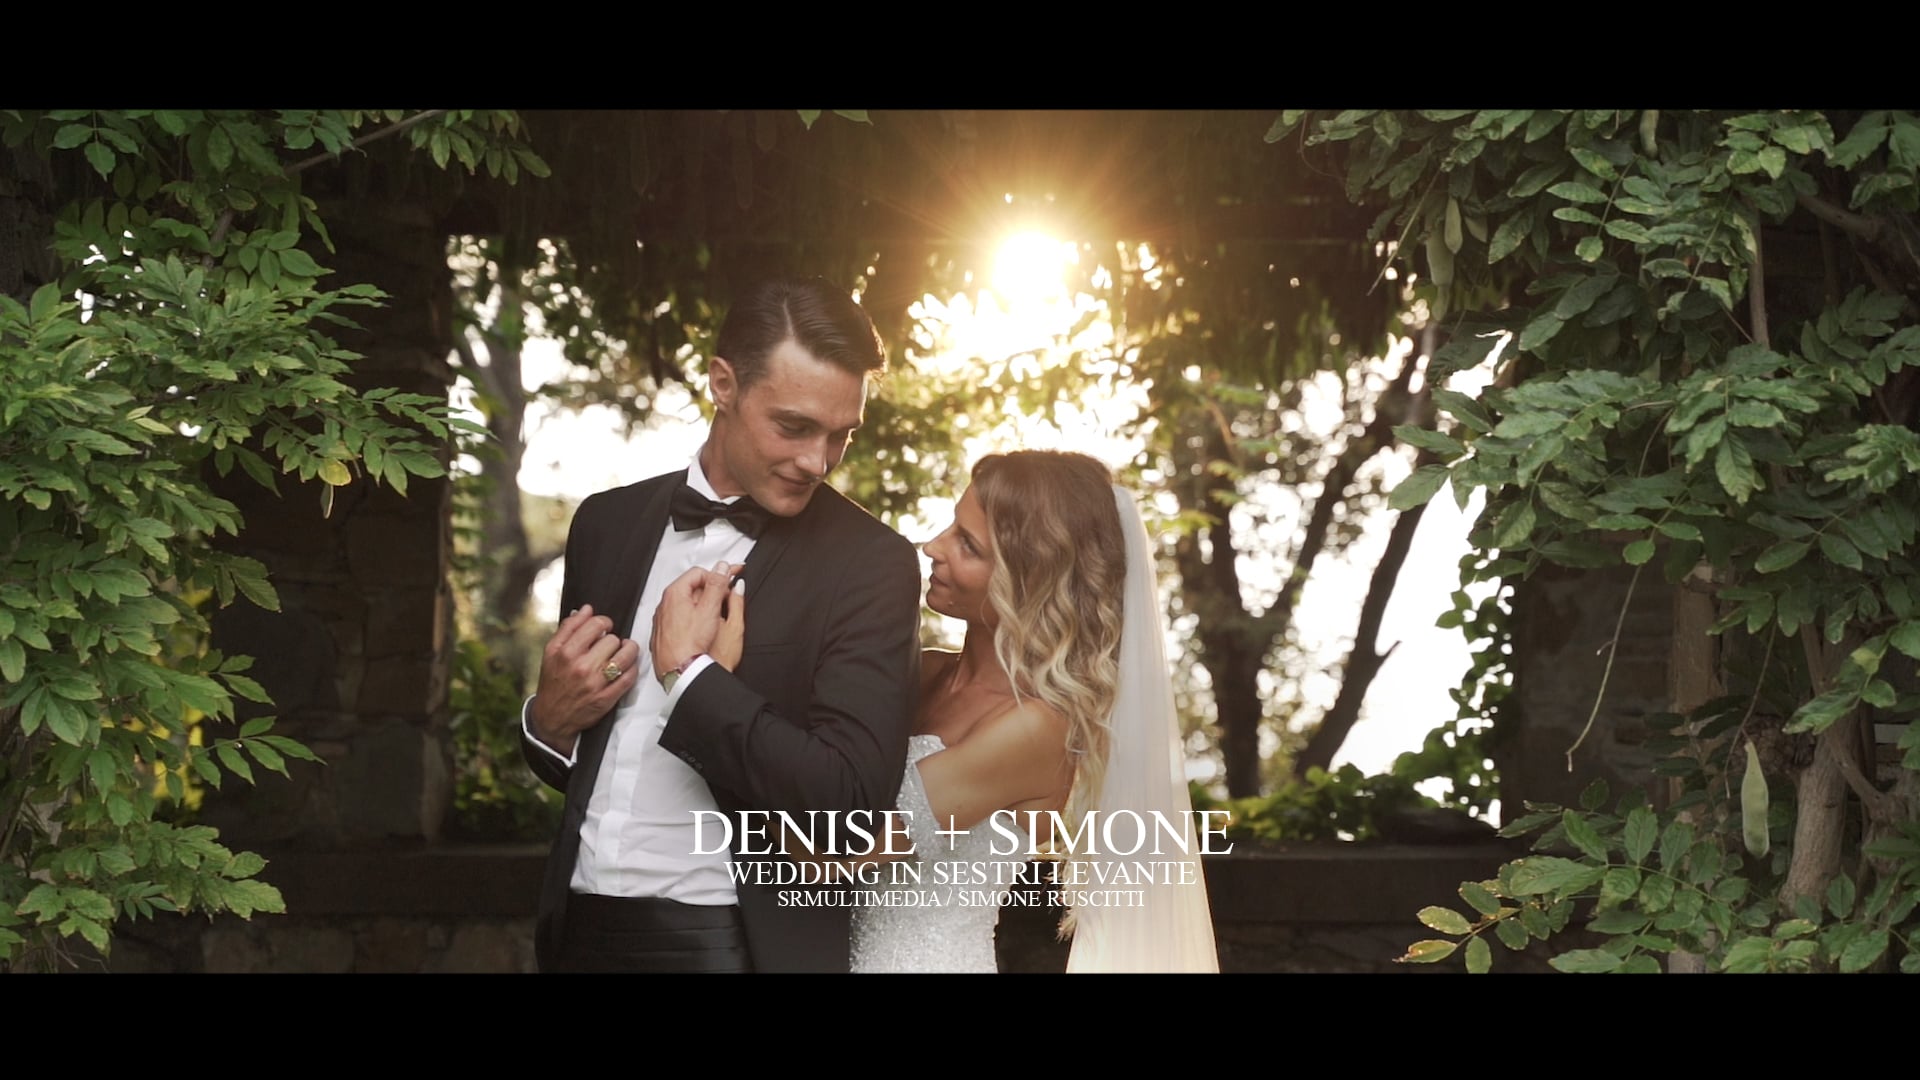 DENISE + SIMONE | WEDDING IN SESTRI LEVANTE